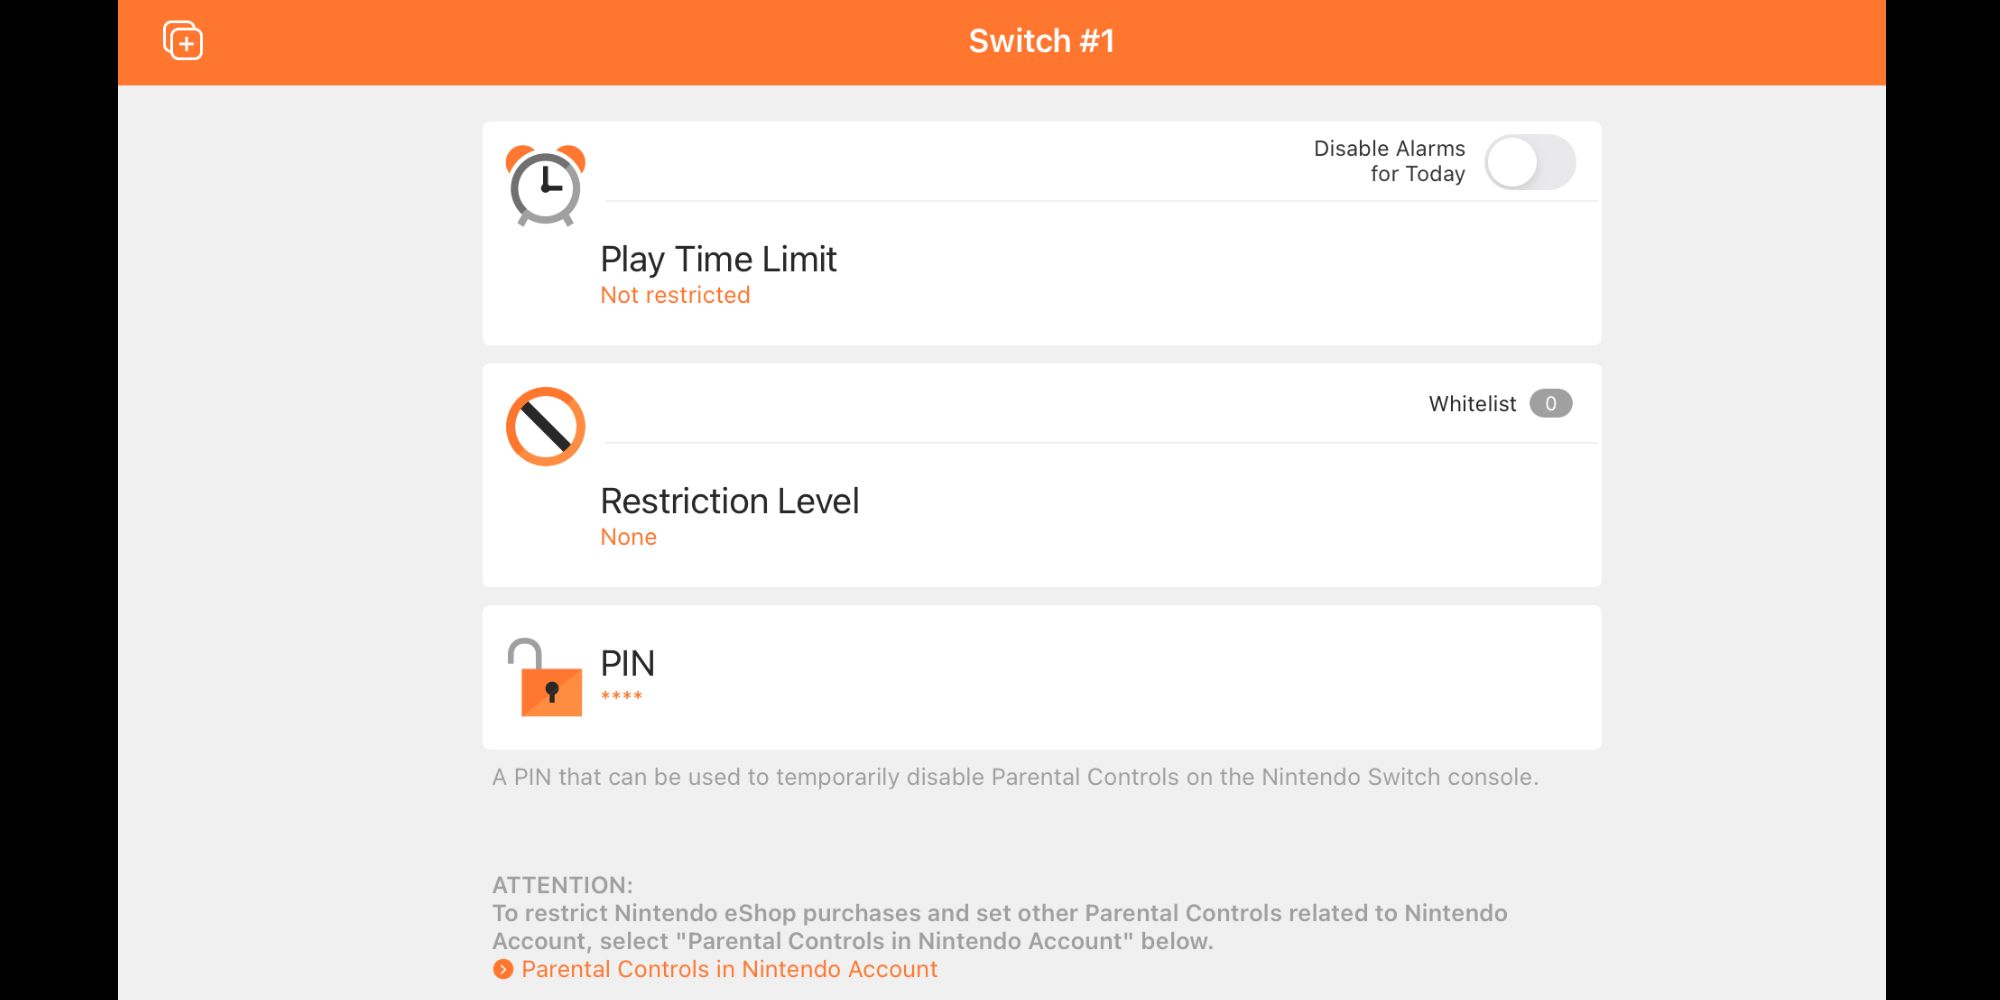 How To Set Up Nintendo Switch Parental Controls